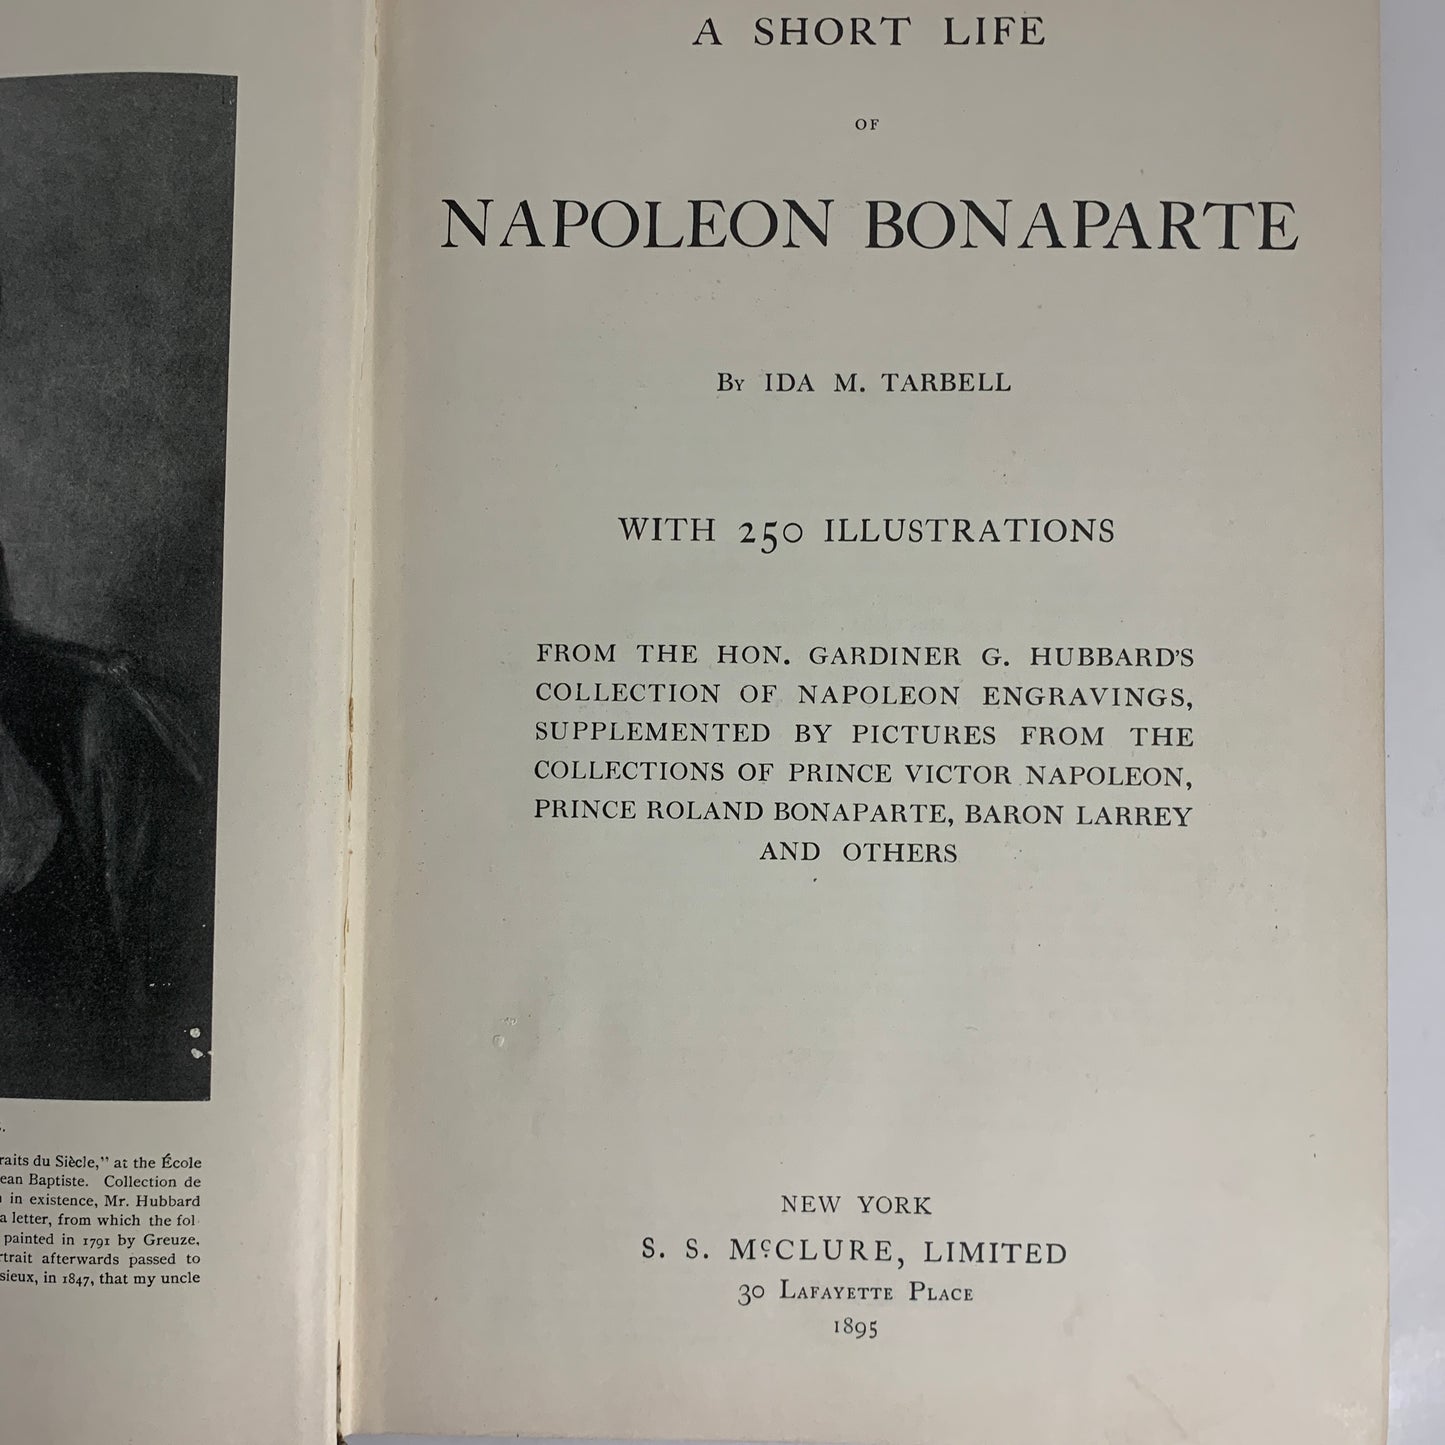 A Short Life of Napoleon Bonaparte